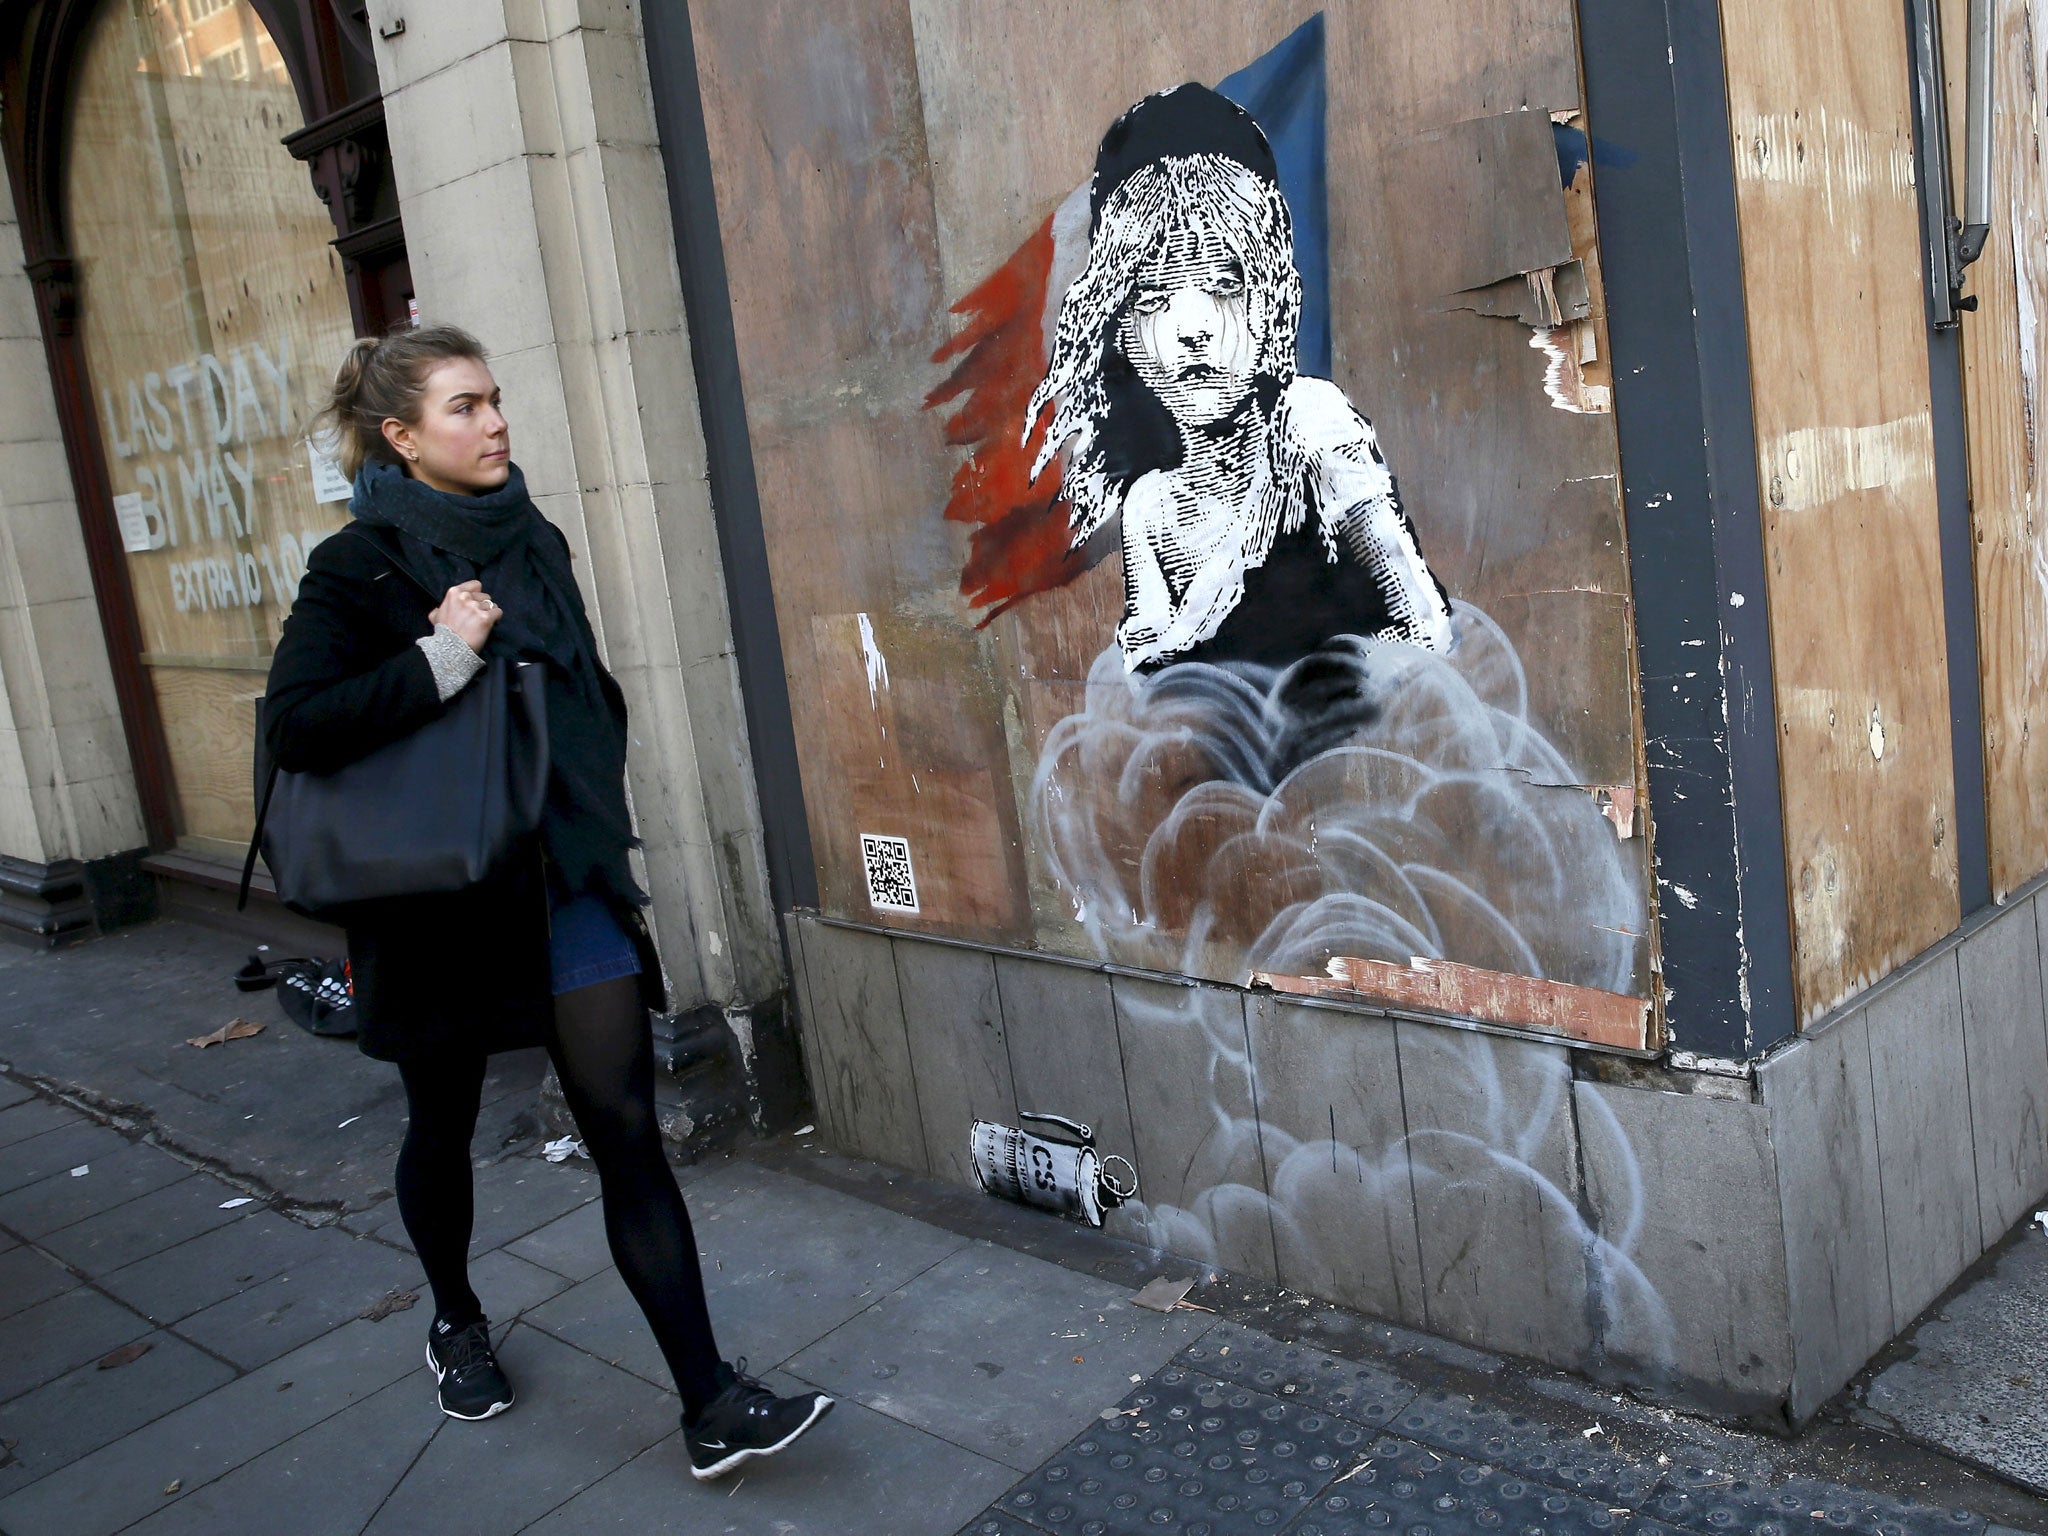 Revolutionary figure: a graffiti mural by Banksy